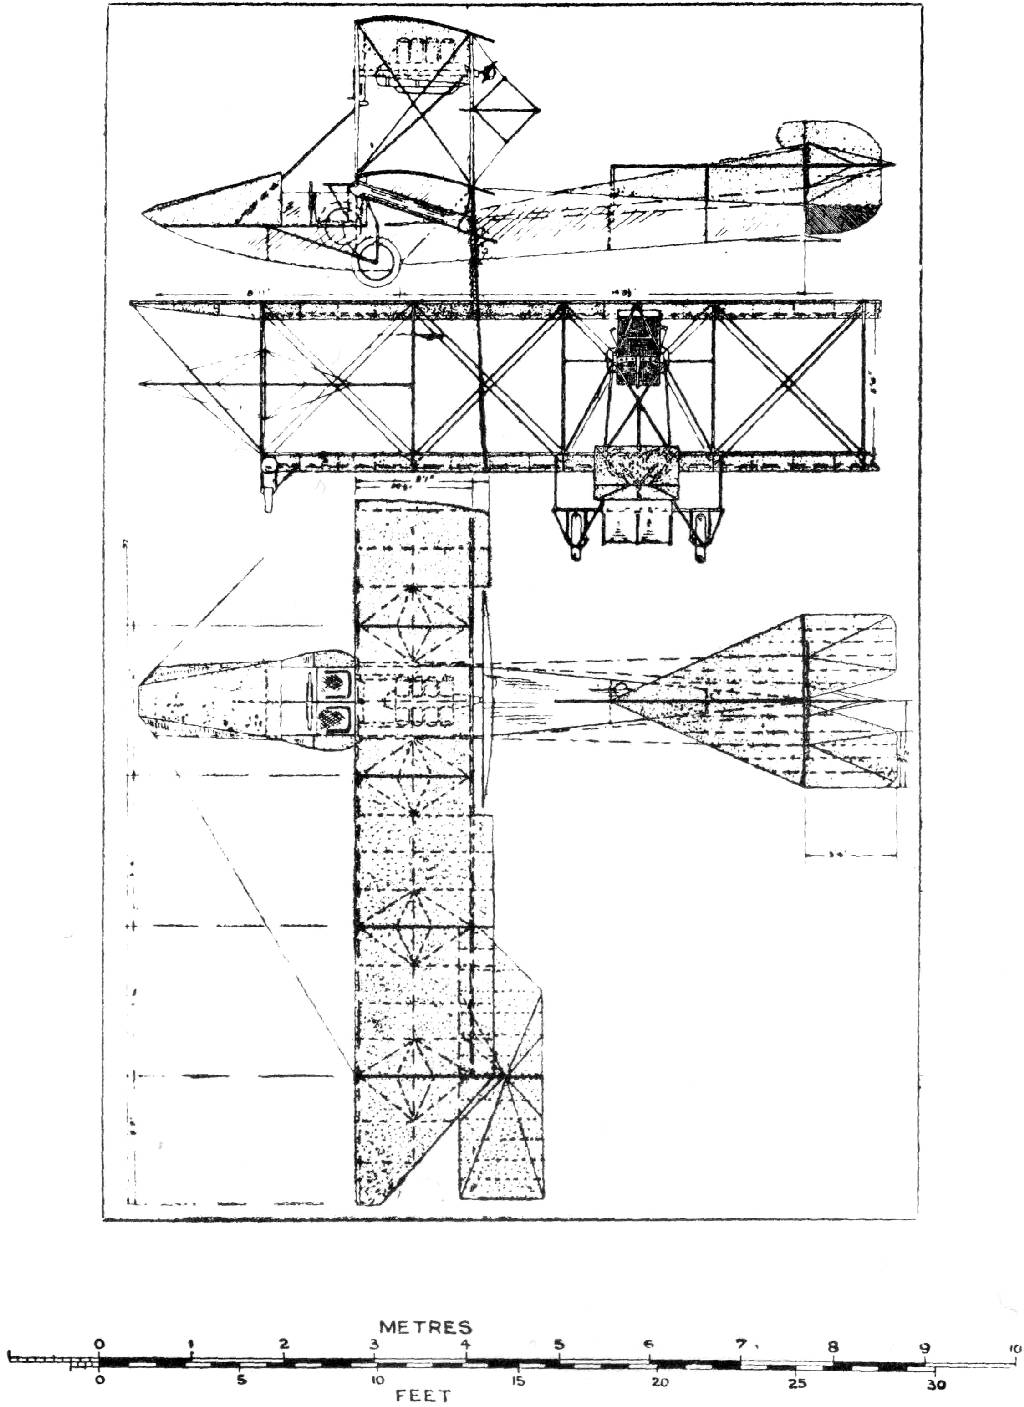 Curtiss. 1913 flying boat. Uniform Aeroplane Scale